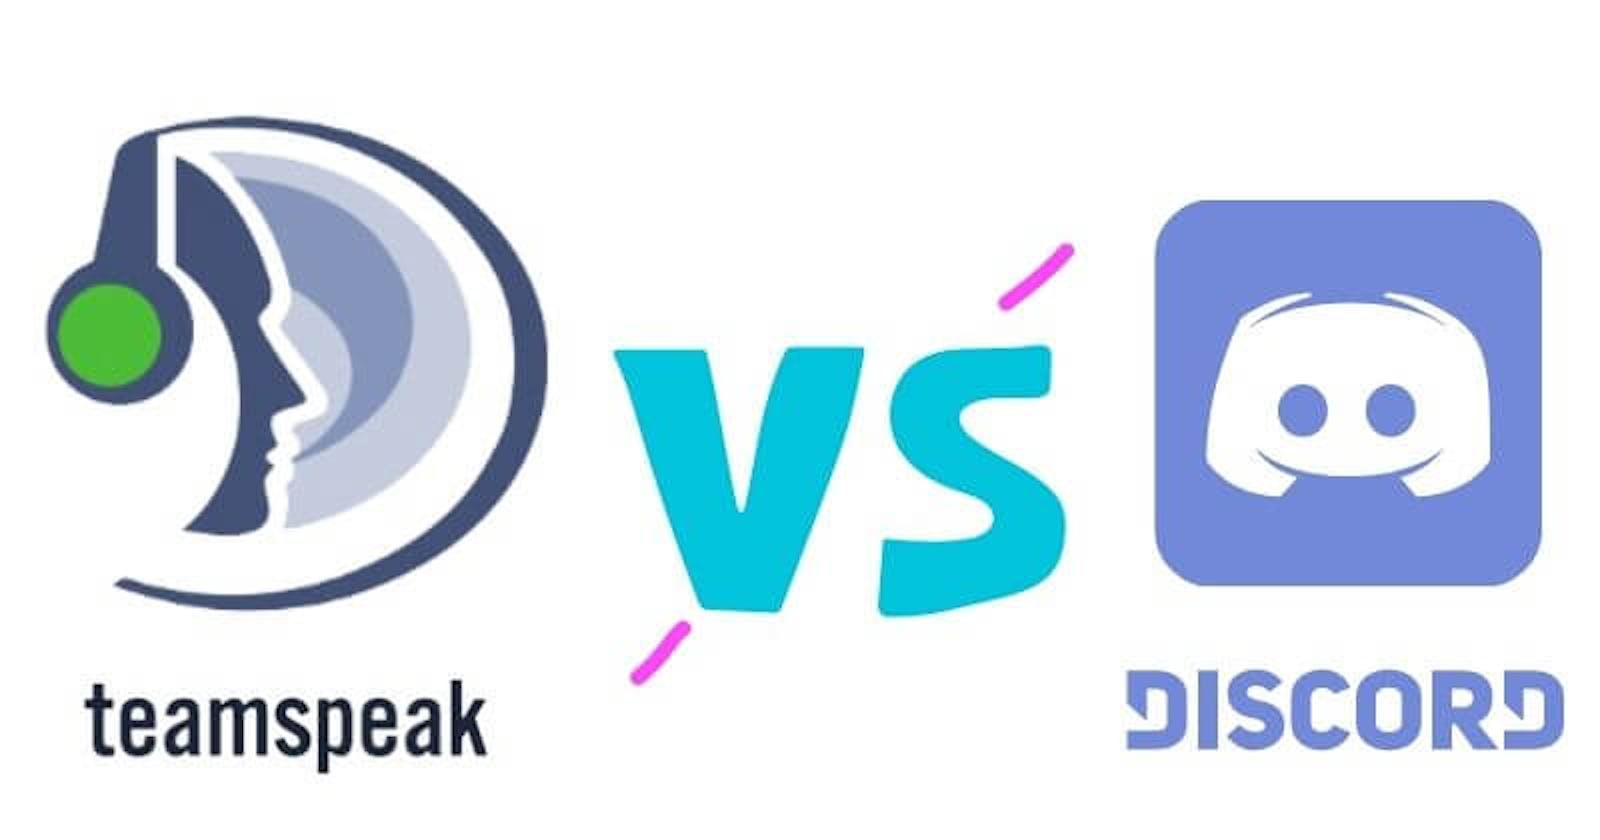 Teamspeak VS Discord 2022: Which is more useful